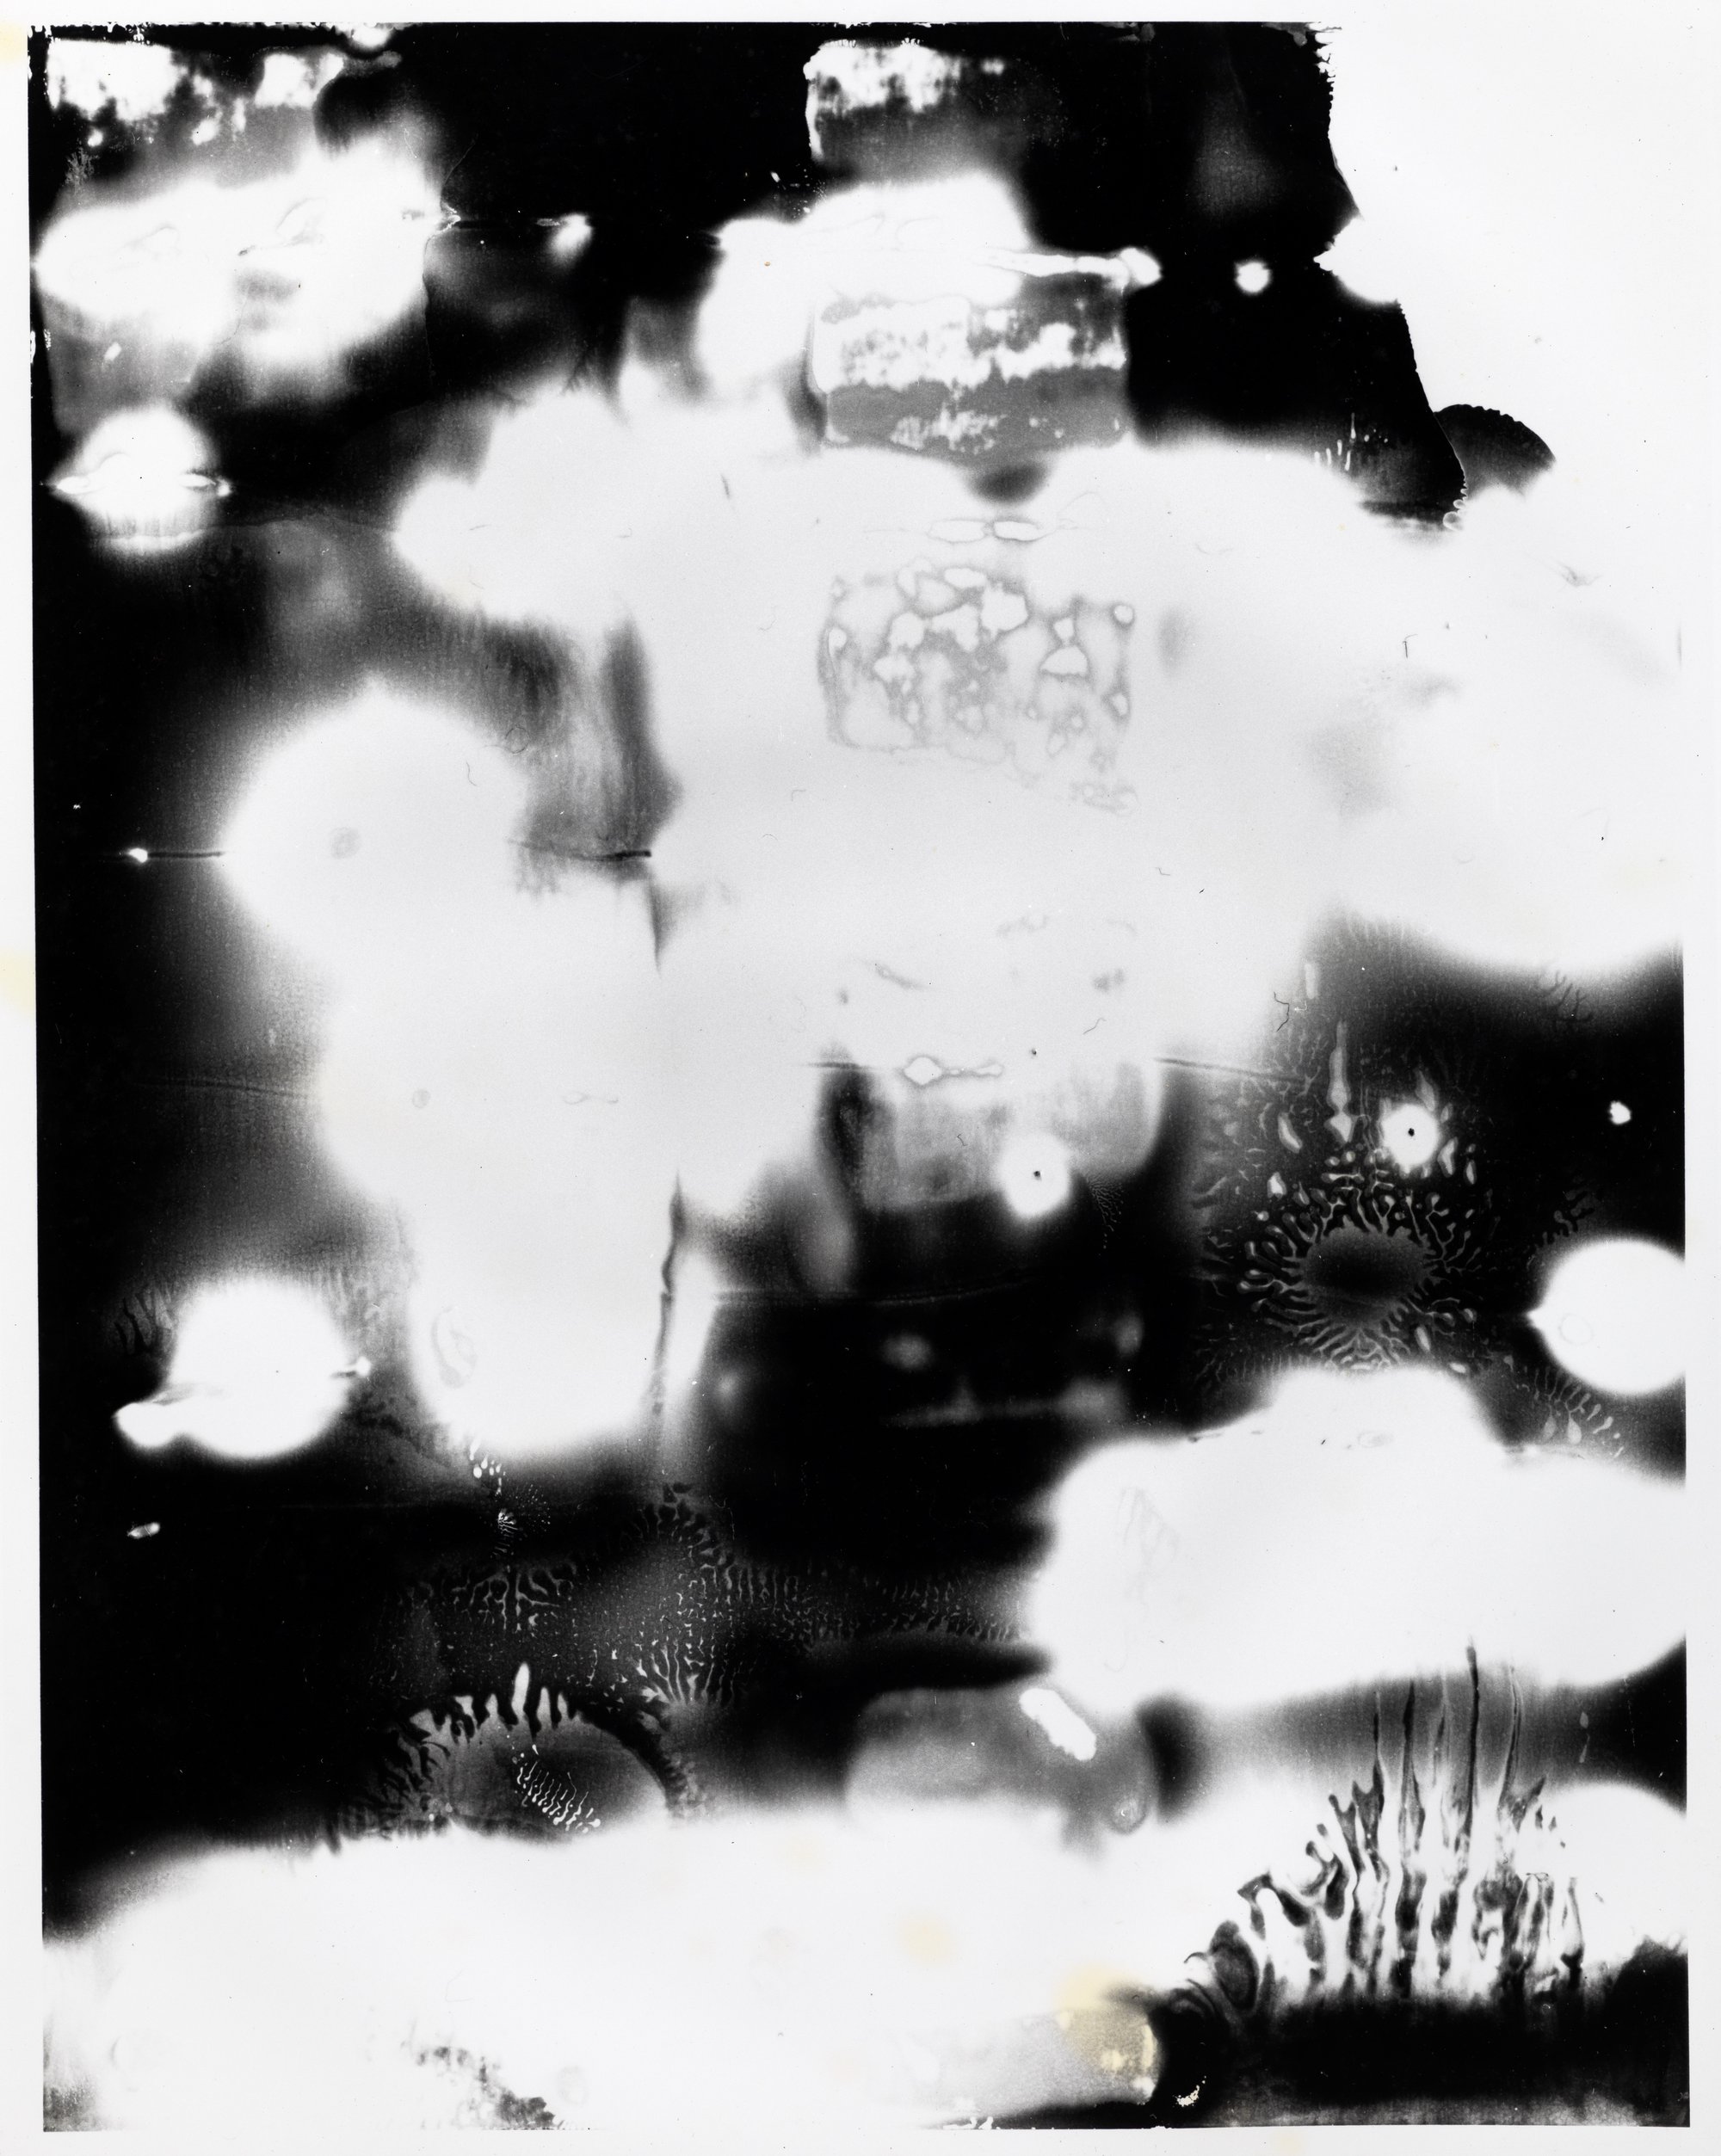 Shinro Ohtake, Retina/Dark Fever 13, gelatine silver print, 55.7 x 45.5 cm (21 7/8 x 17 7/8 in), 1990